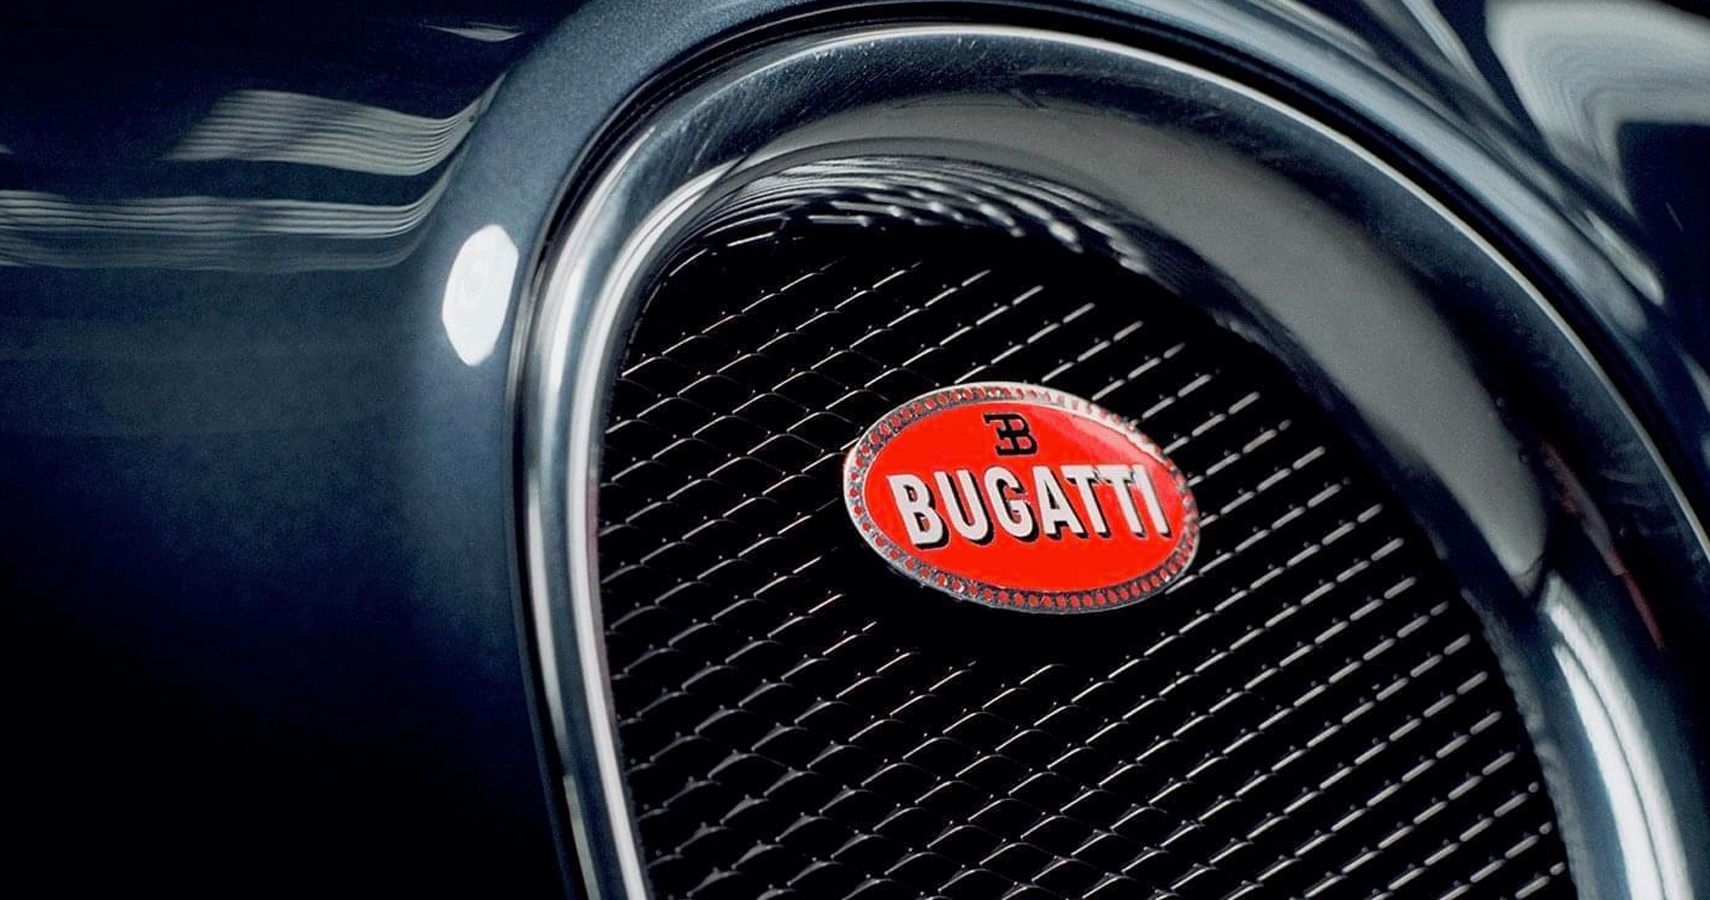 Bugatti logo mounted on grille